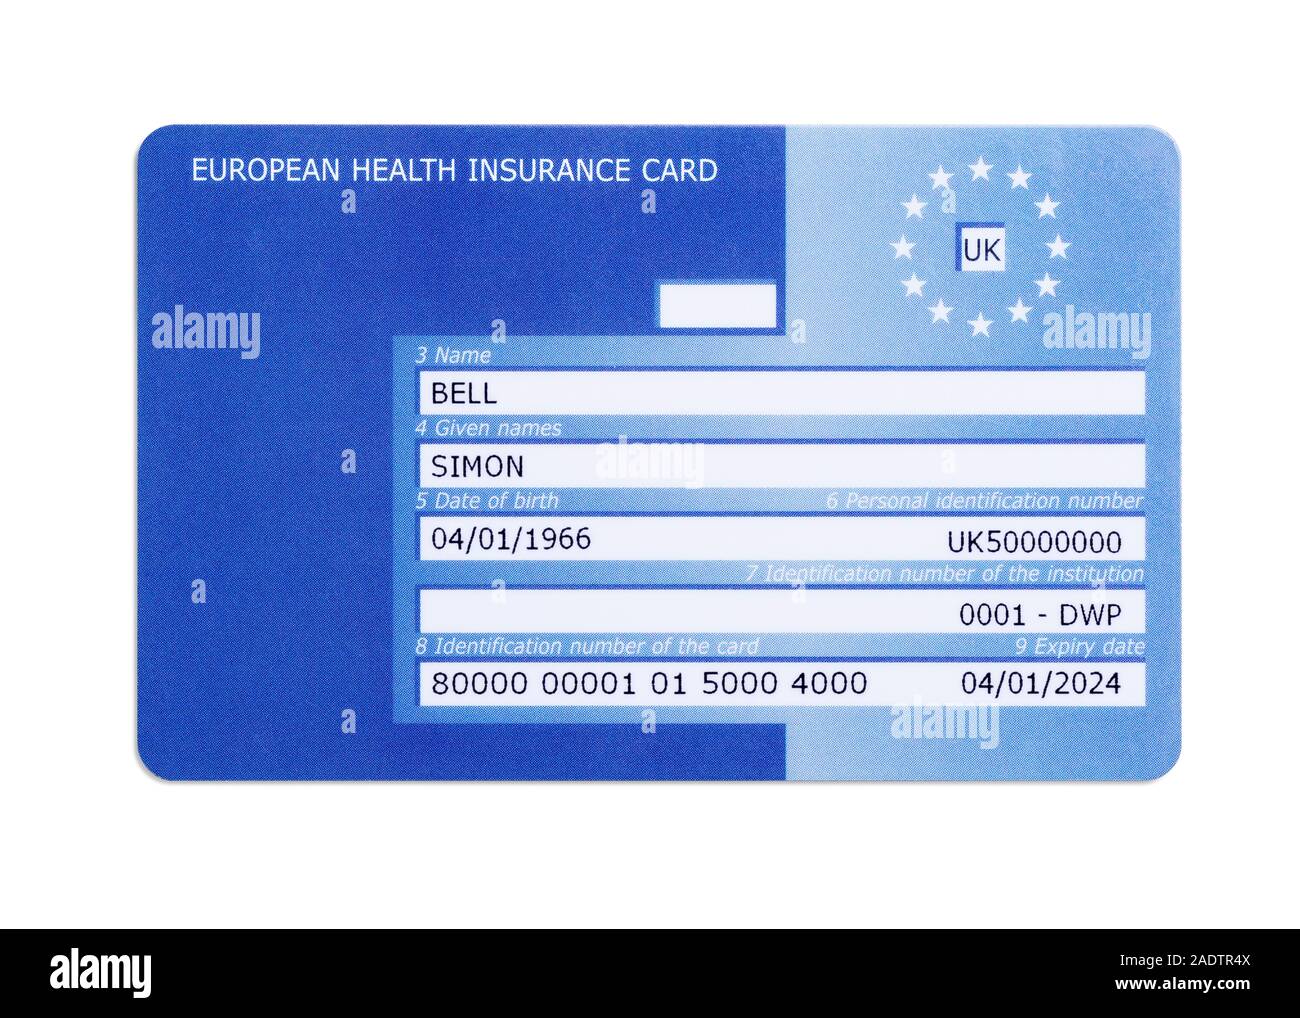 UK European Health Insurance Card Stock Photo